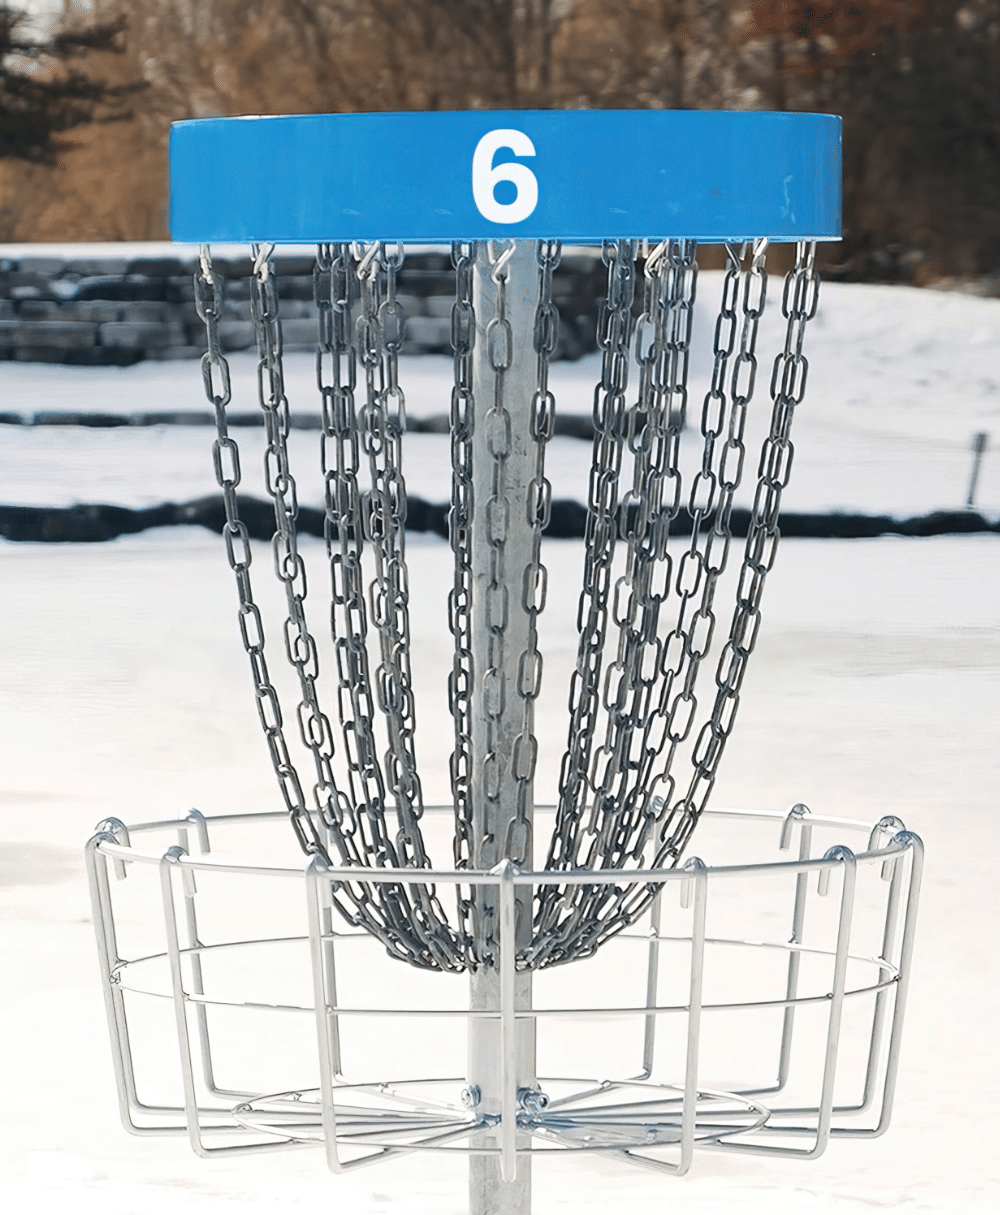 Disc Golf Basket Hole Number Vinyl Stickers - 9 Holes